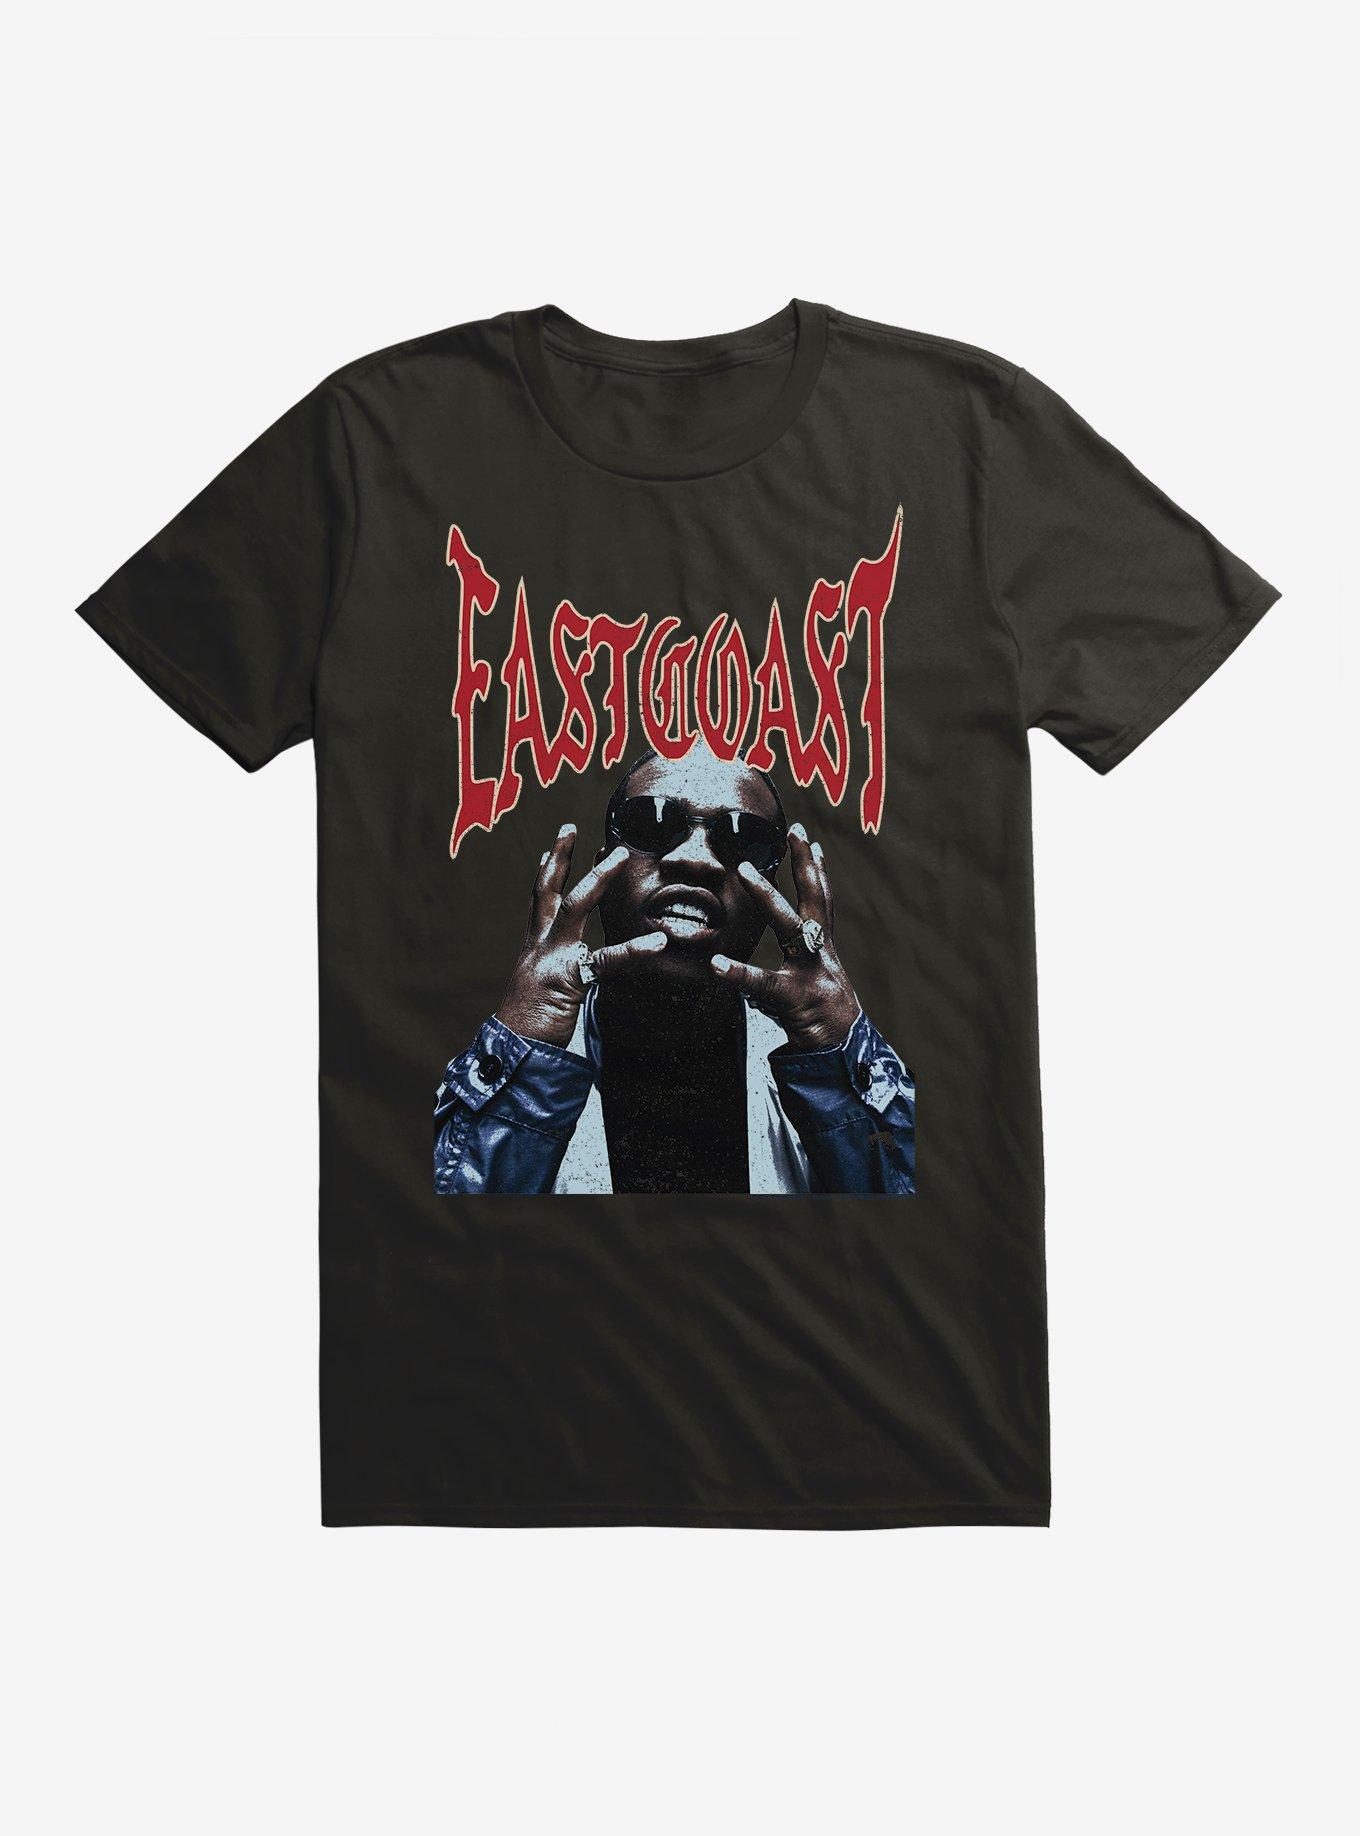 A$AP East Coast T-Shirt Hot Topic